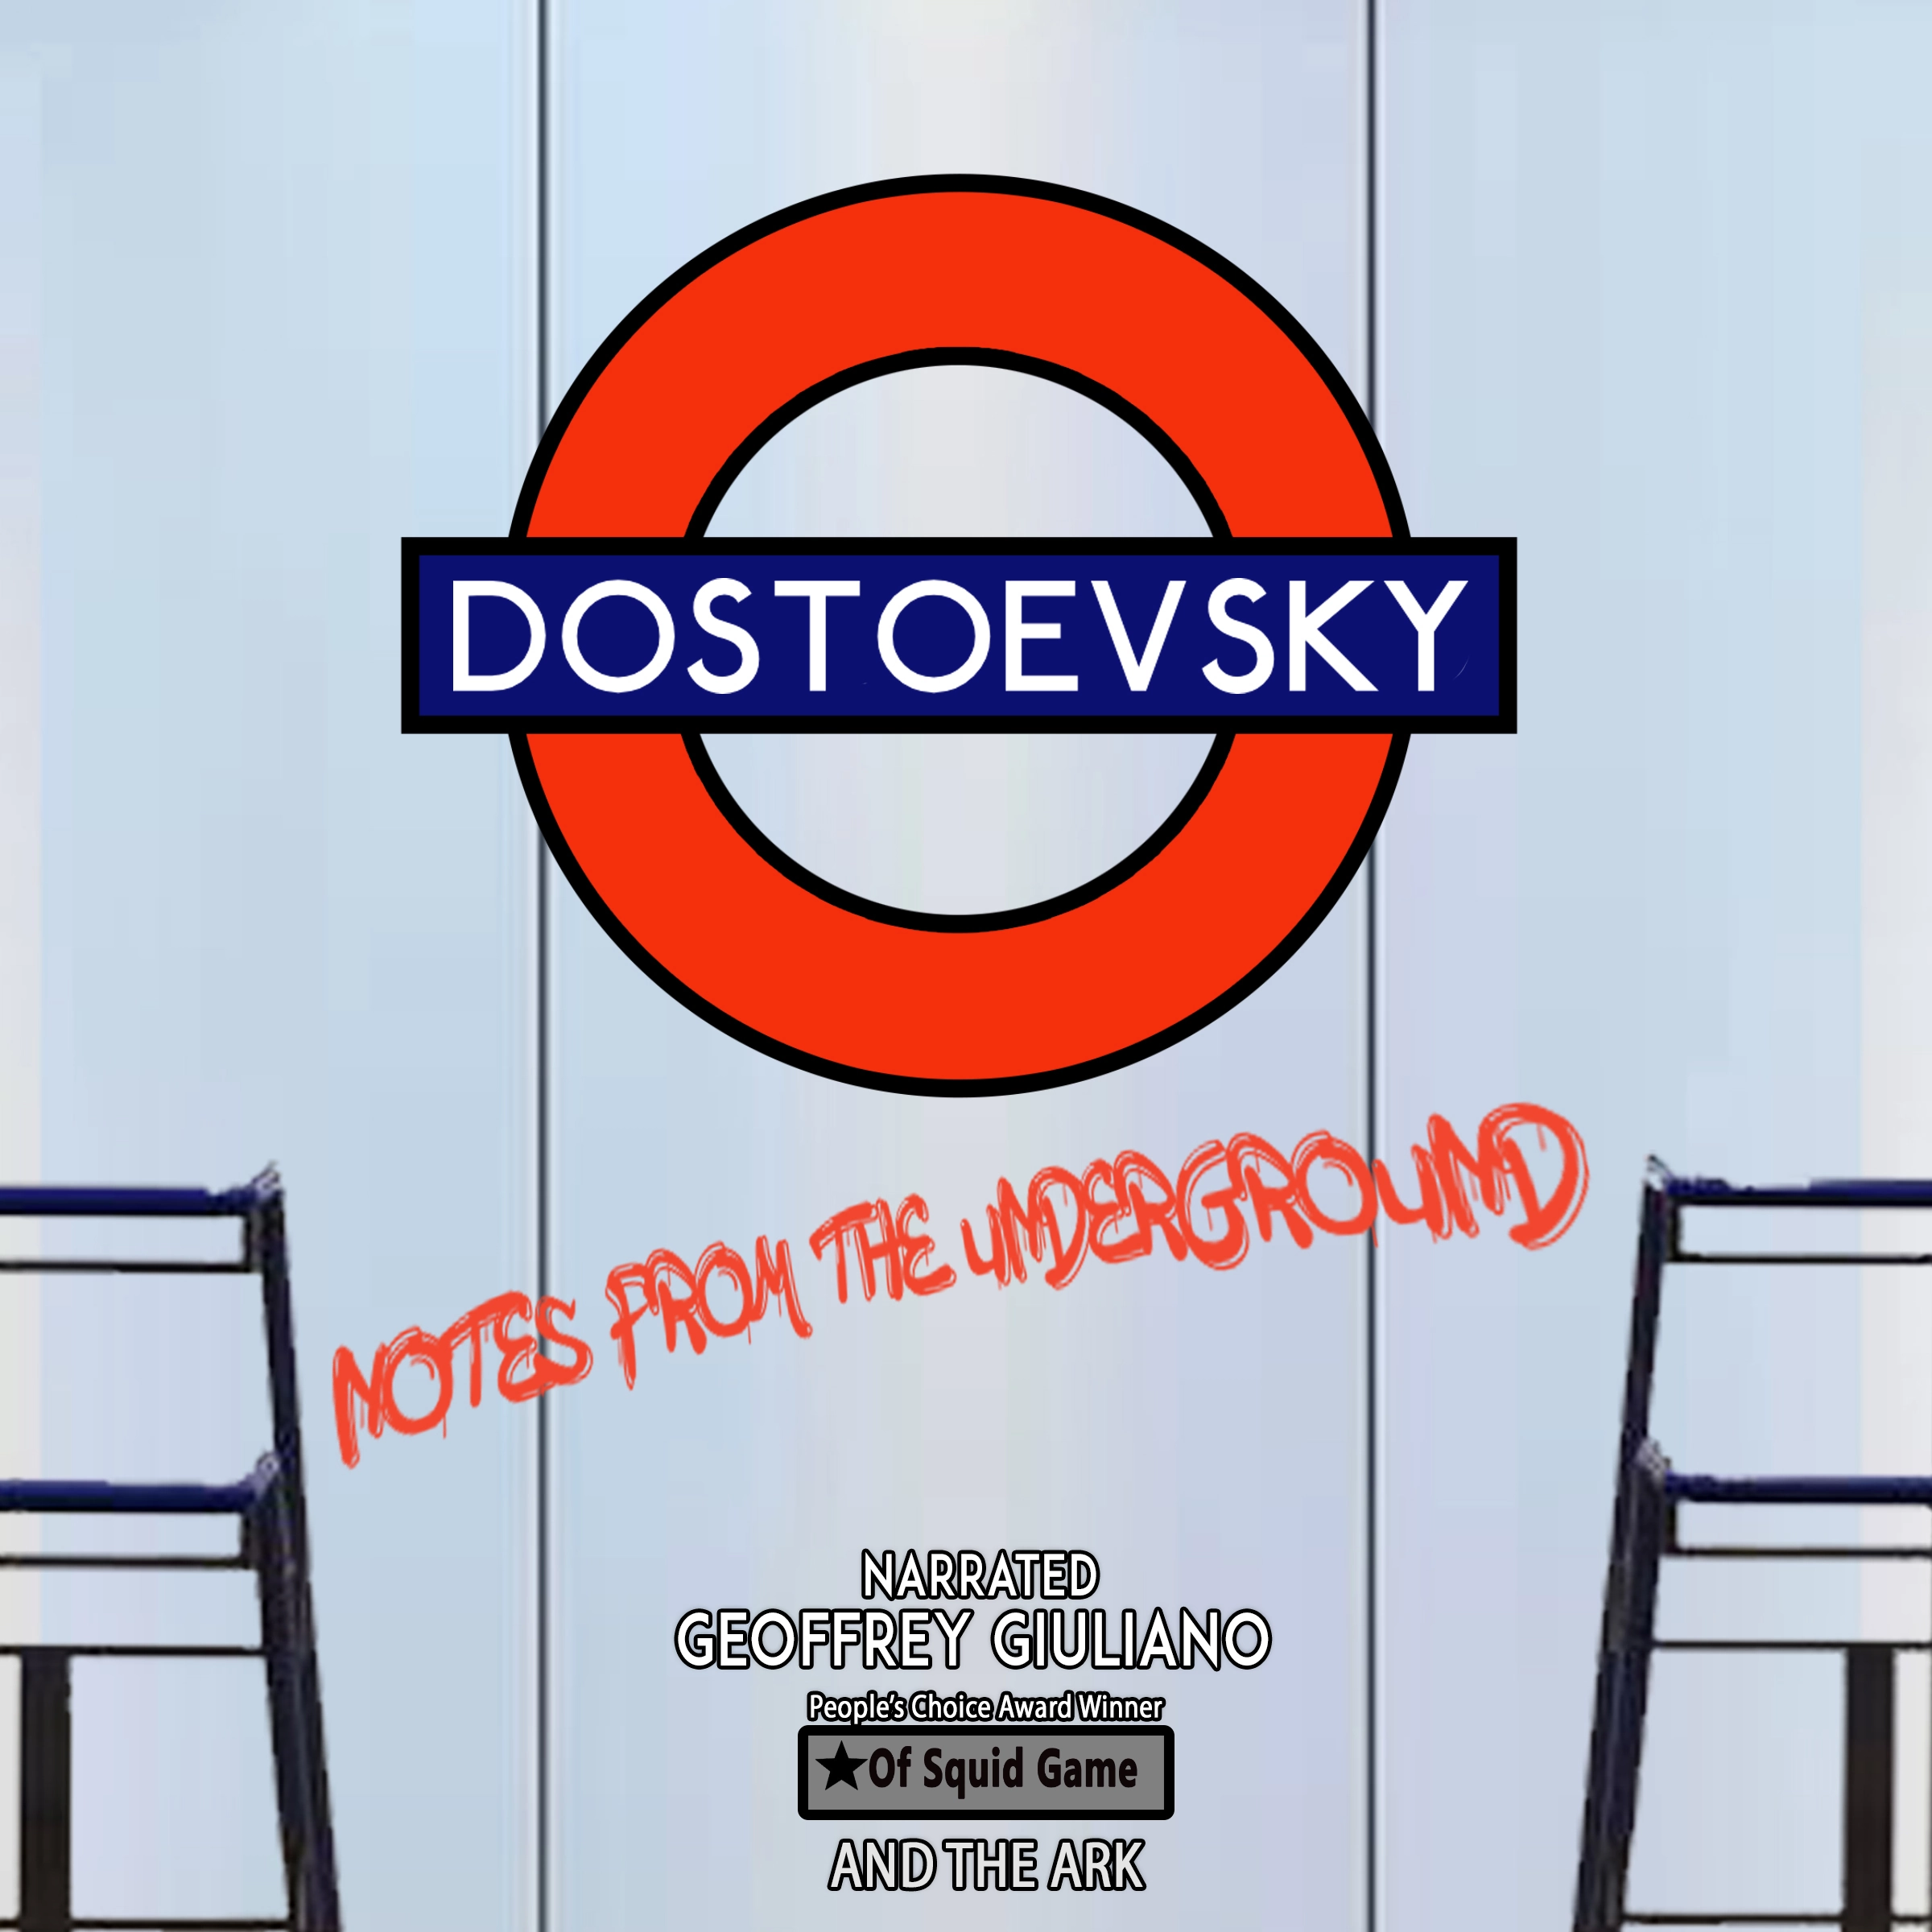 Dostoevesky Notes From The Underground by Fyodor Dostoevesky Audiobook